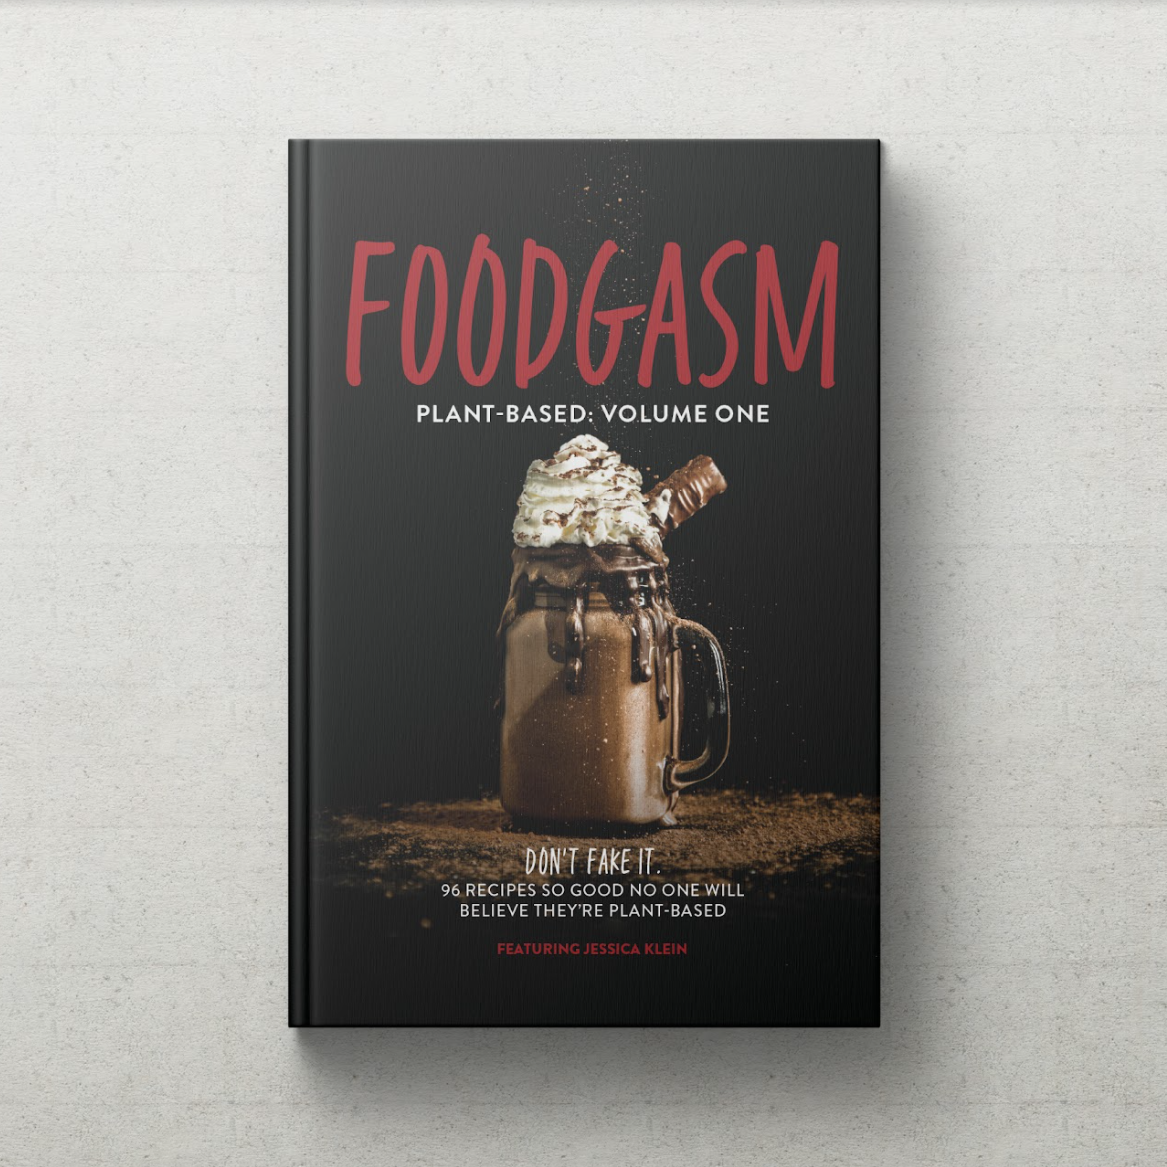 Foodgasm: Plant-Based